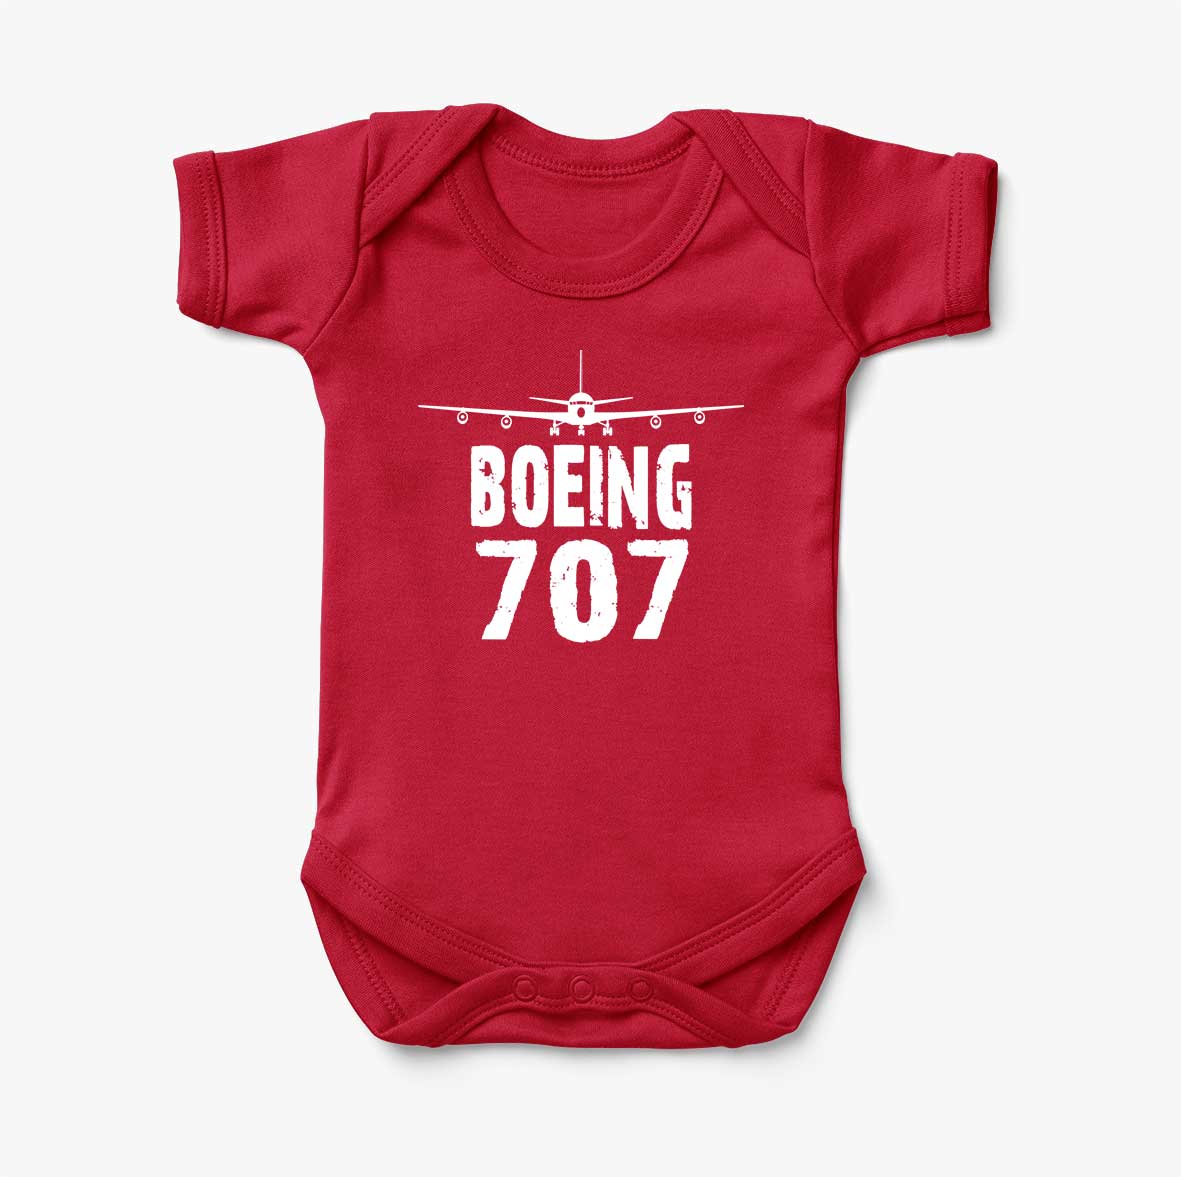 Boeing 707 & Plane Designed Baby Bodysuits